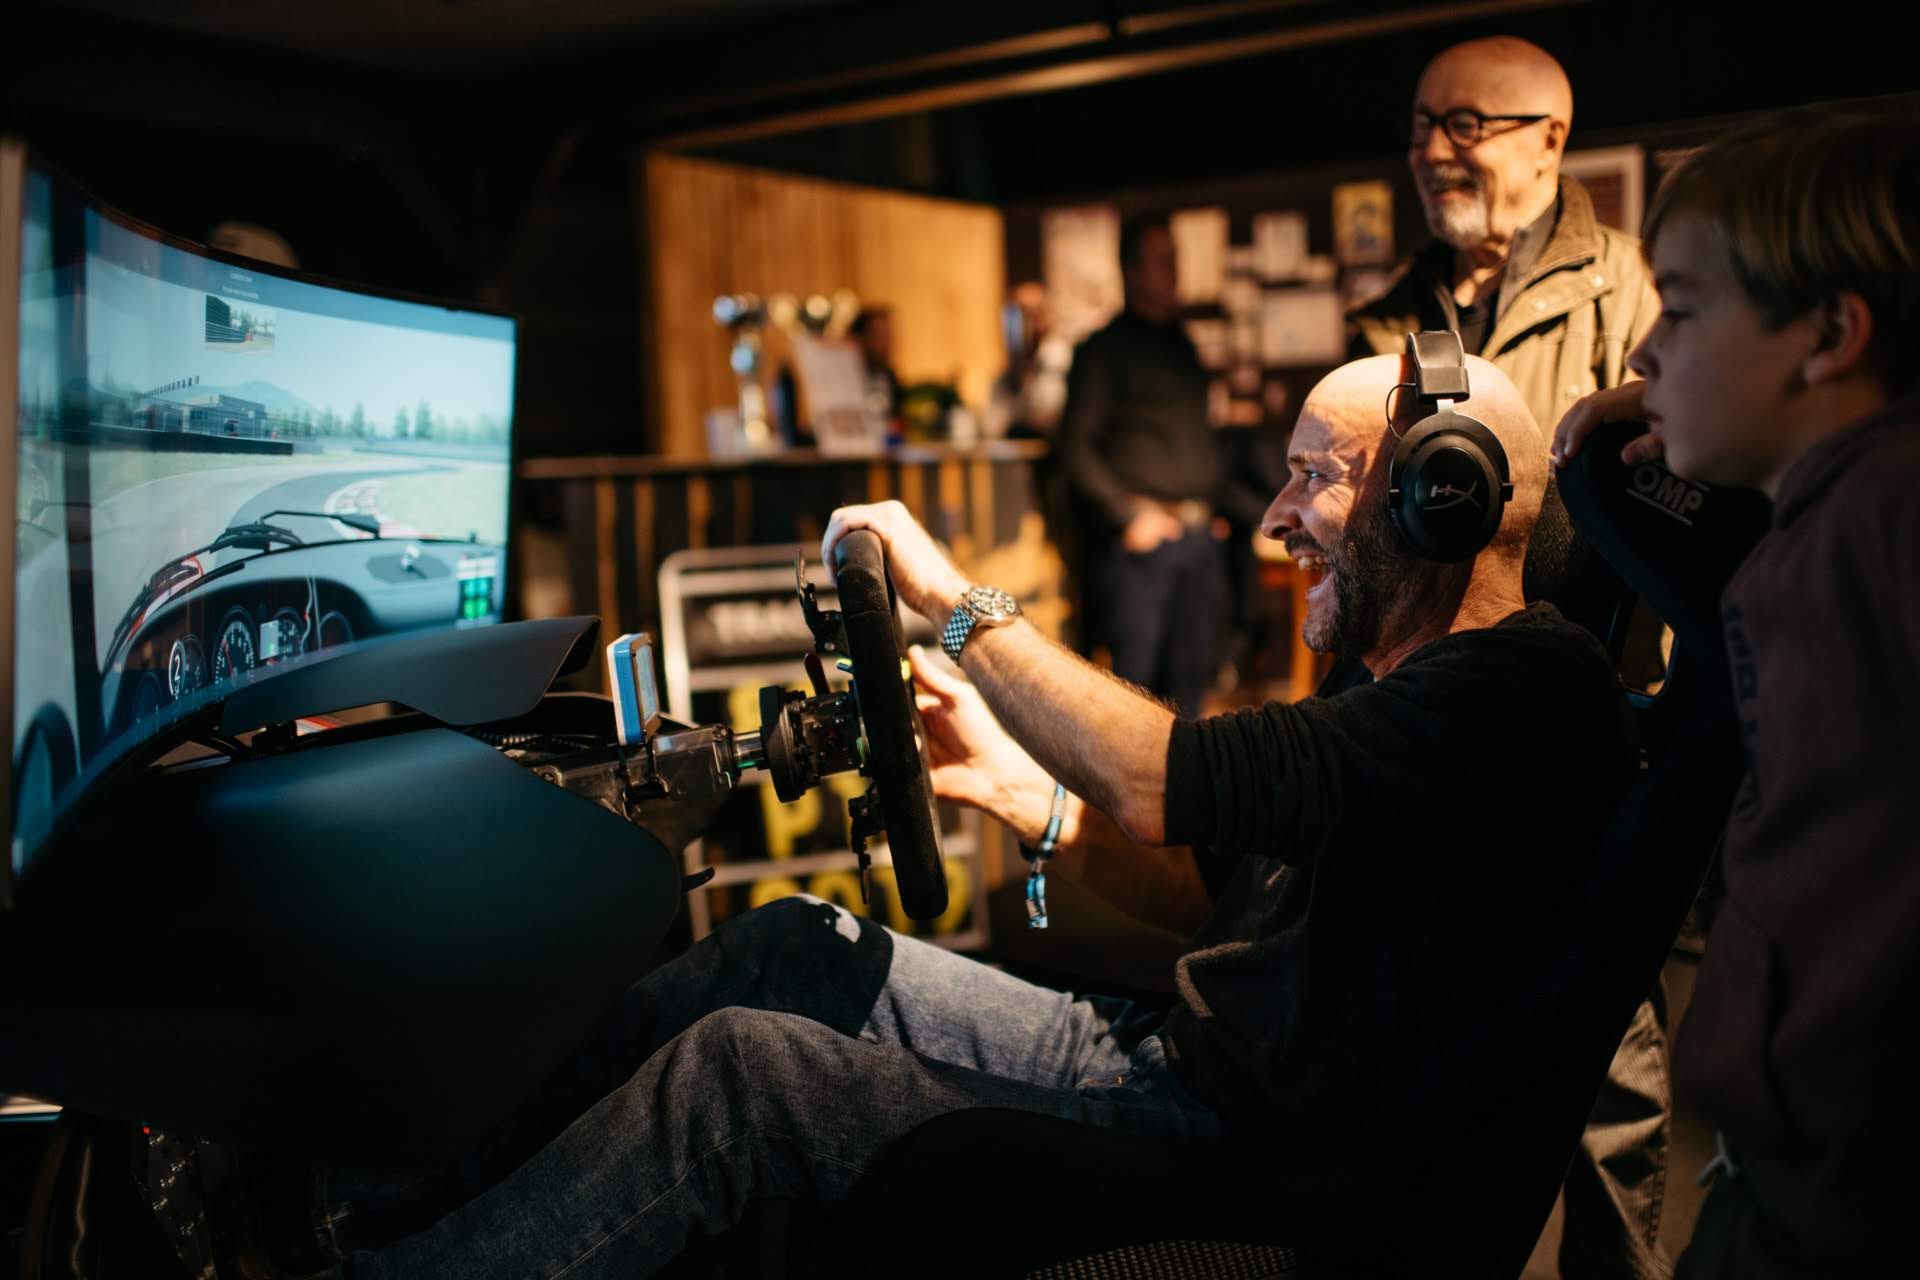 racefire simracing rennsimulatoren simulatoren autorennen motorsport digital gaming events schweiz